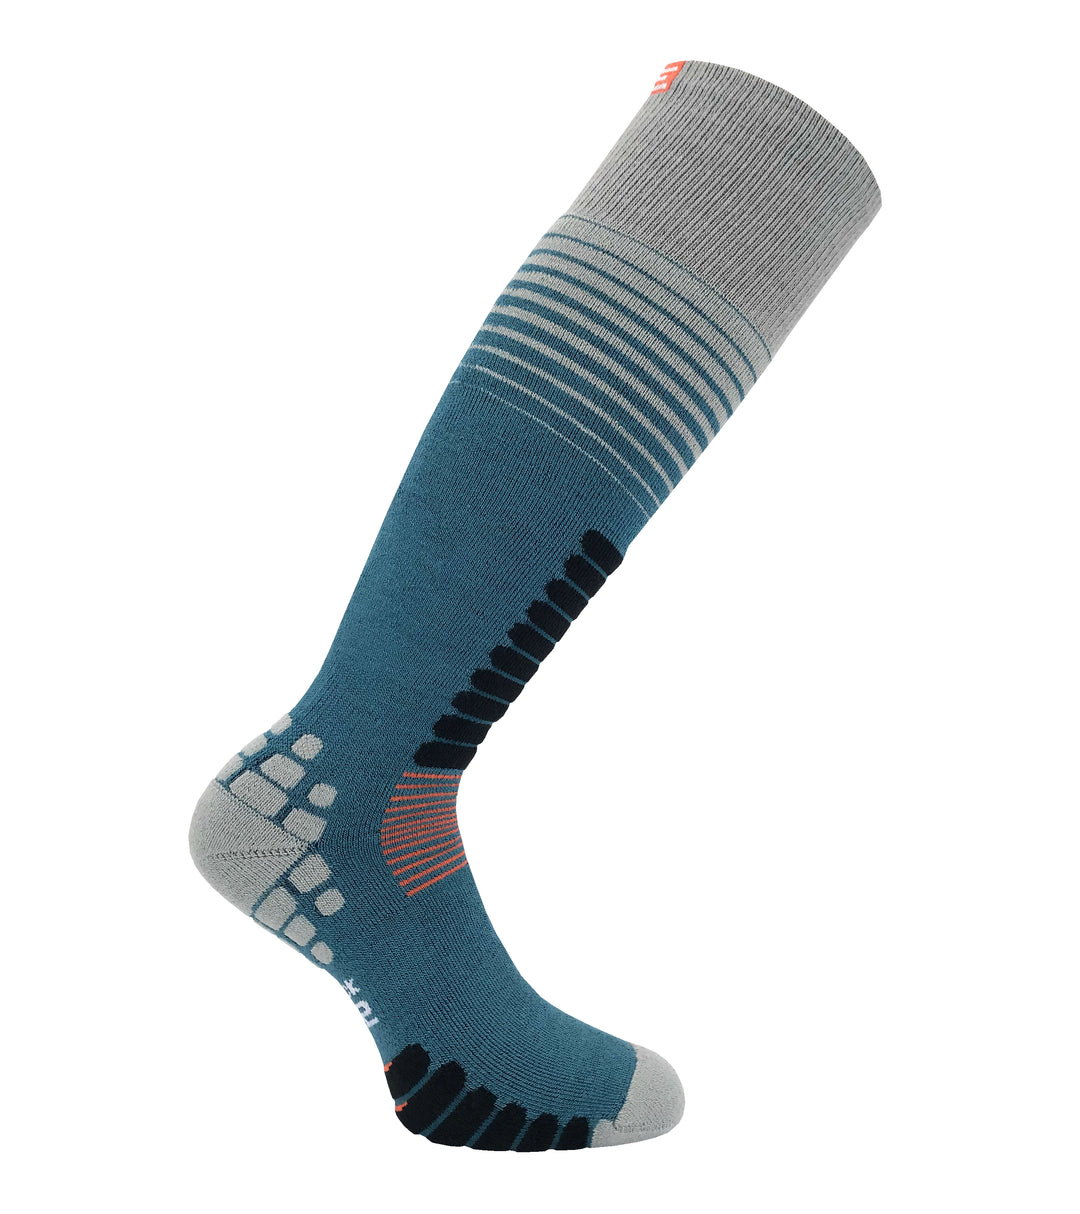 Ski Zone Medium Weight Socks - 1112